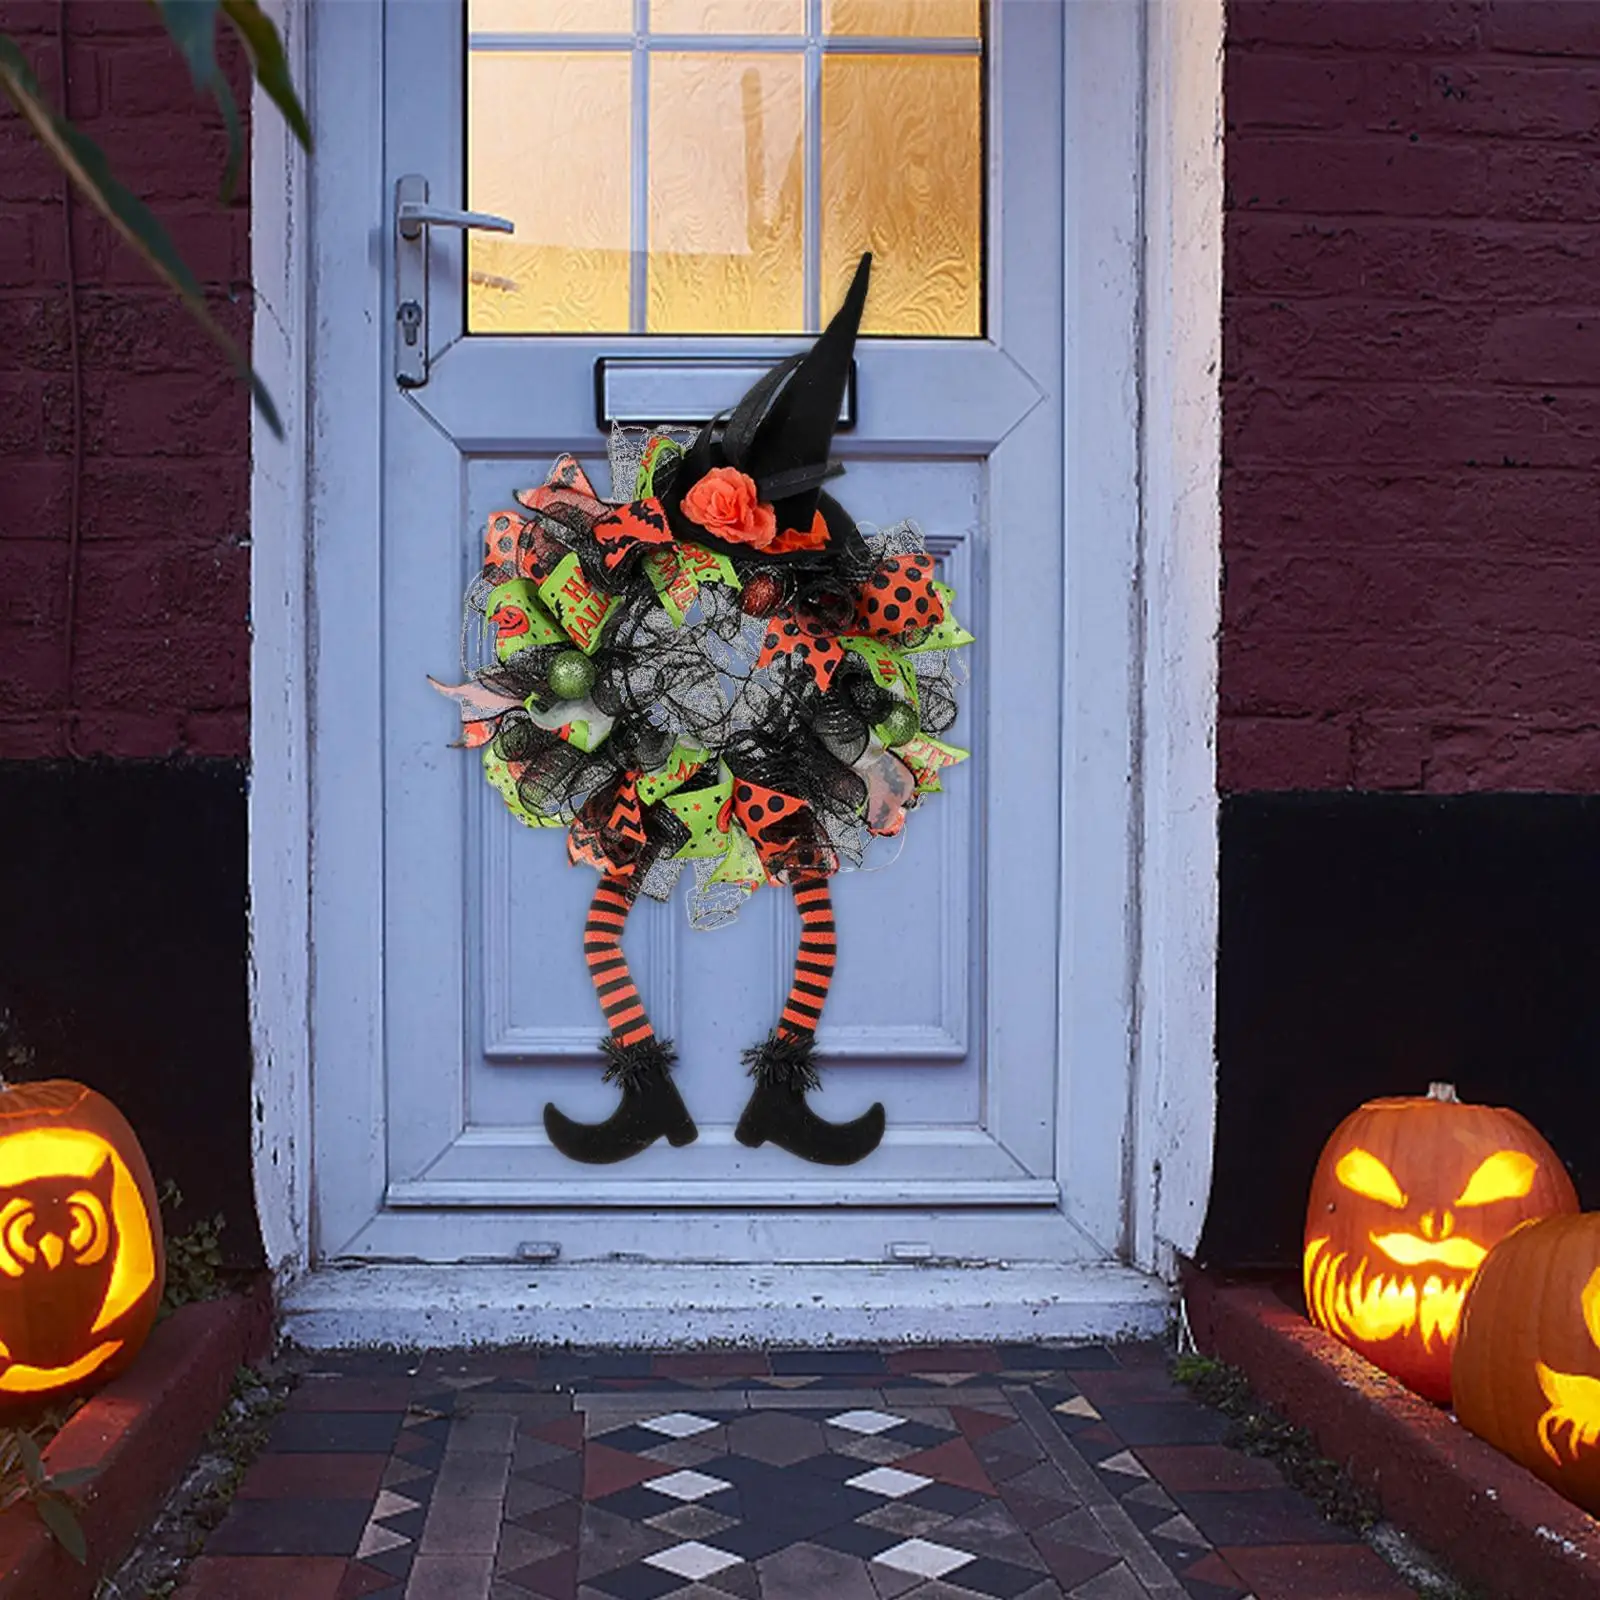 Garland Hanger Mesh Decor with Witch Hat and Legs Halloween Wreath for Front Door for Halloween Window Porch Indoor Outdoor Home